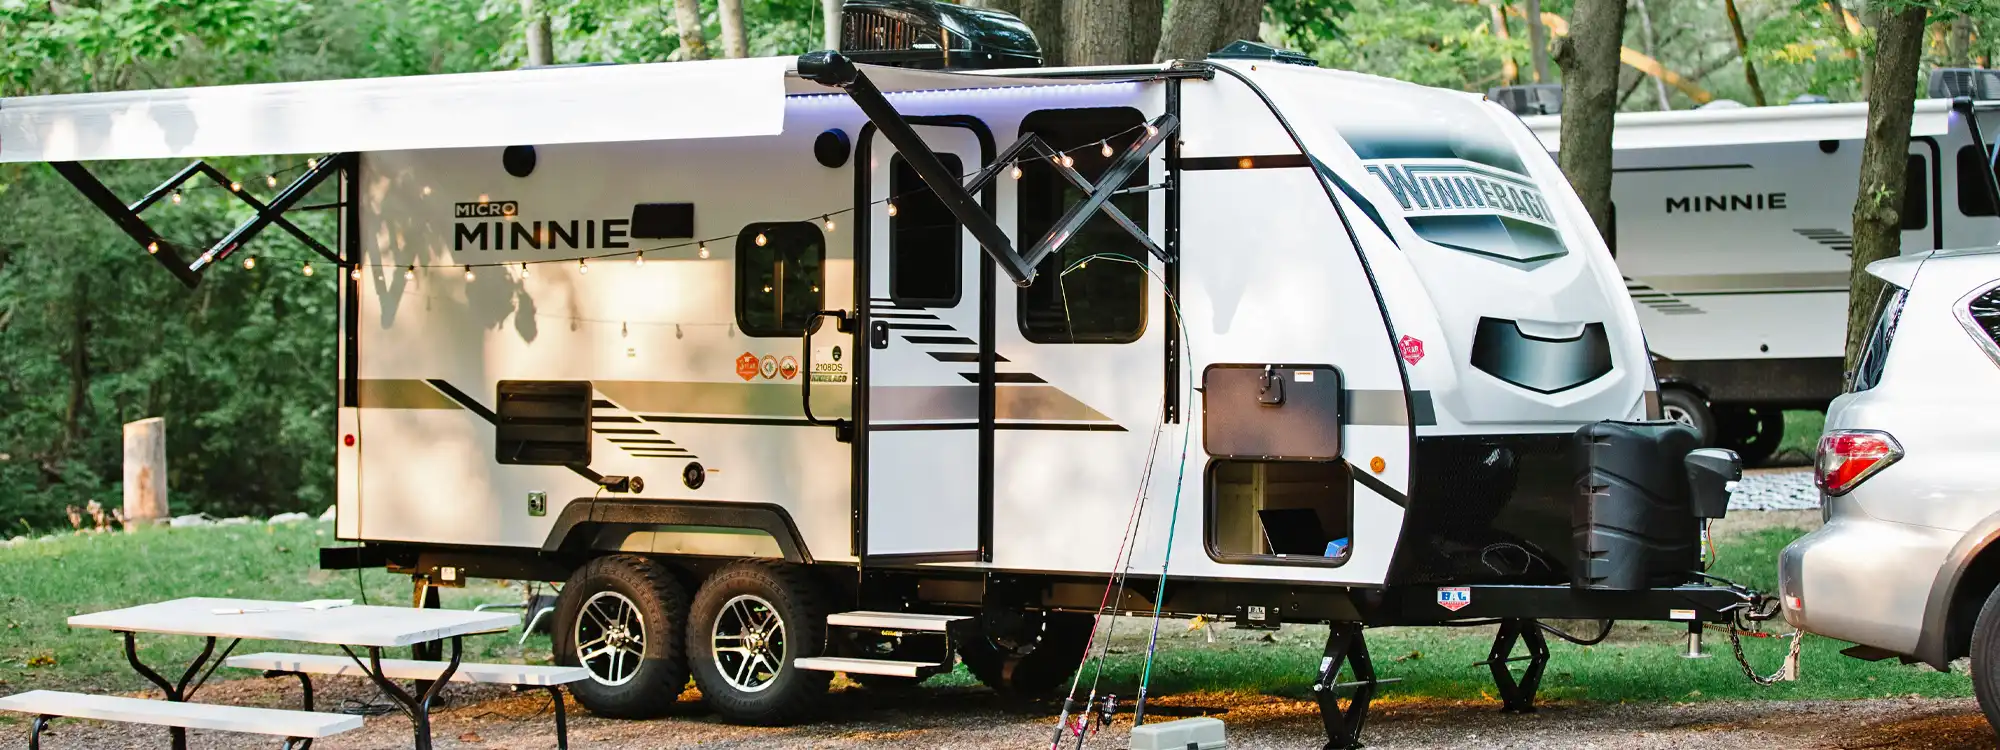 winnebago micro minnie travel trailer set up at a campsite